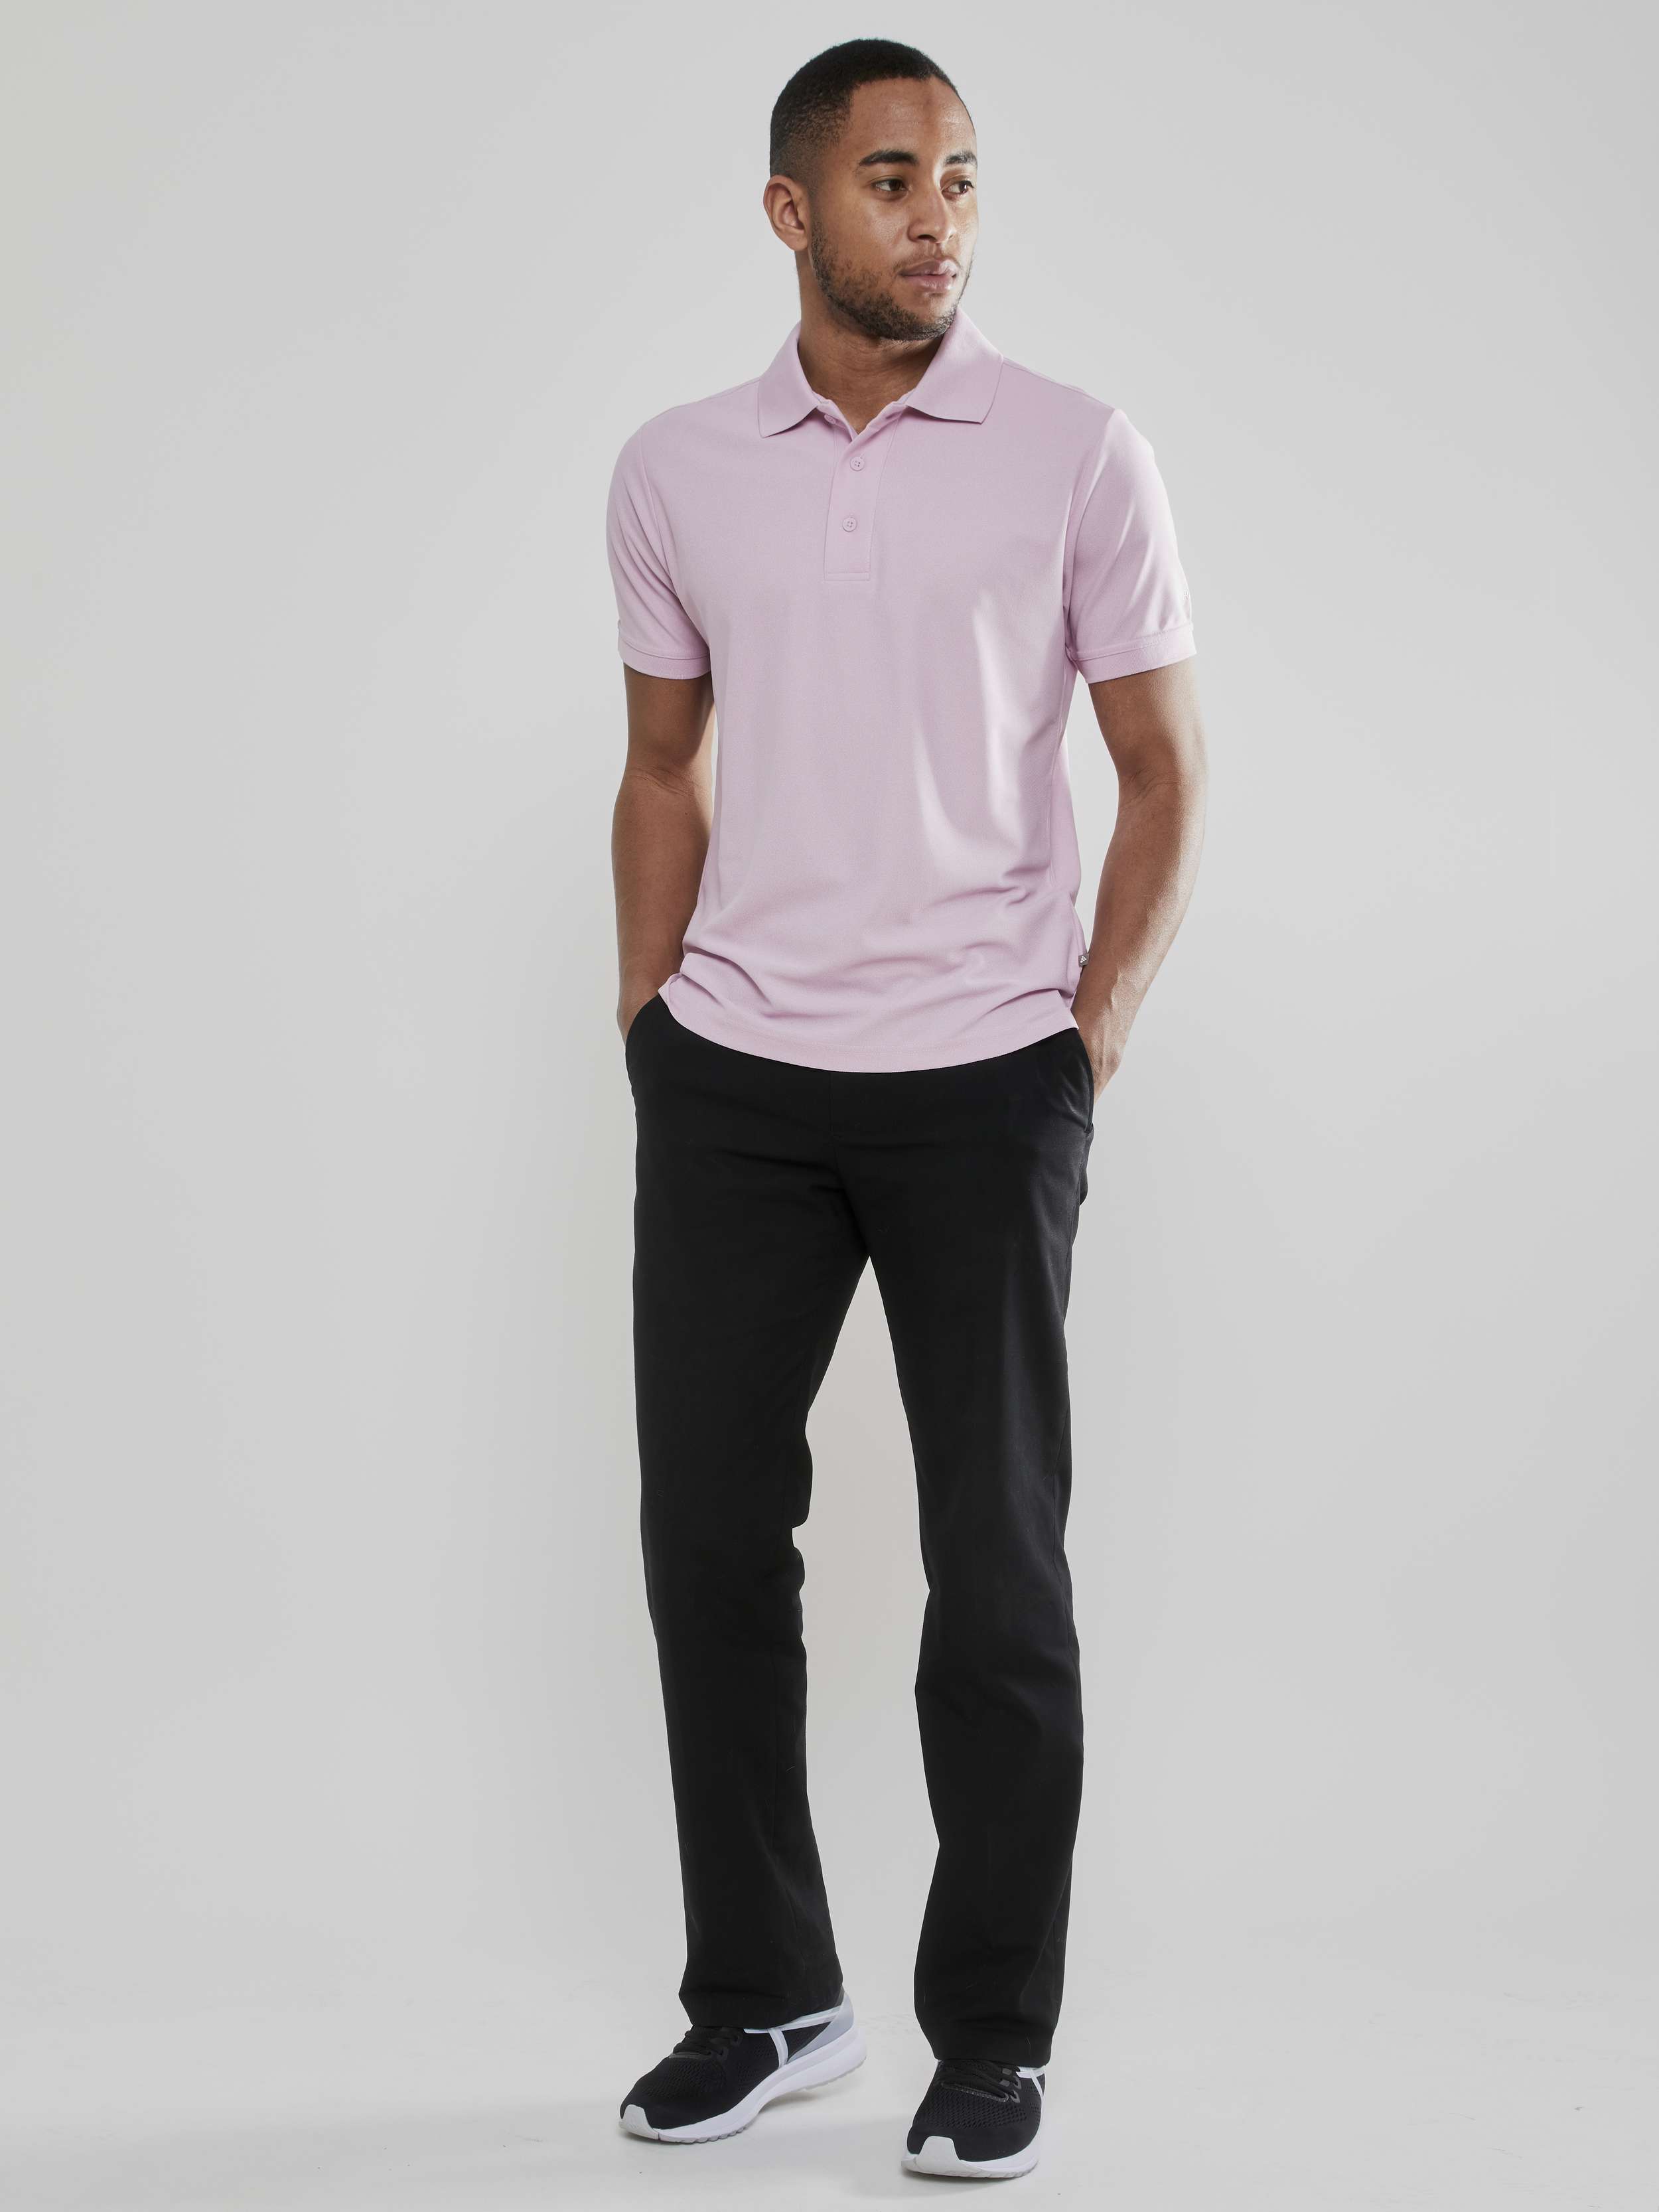 grey and pink polo shirt